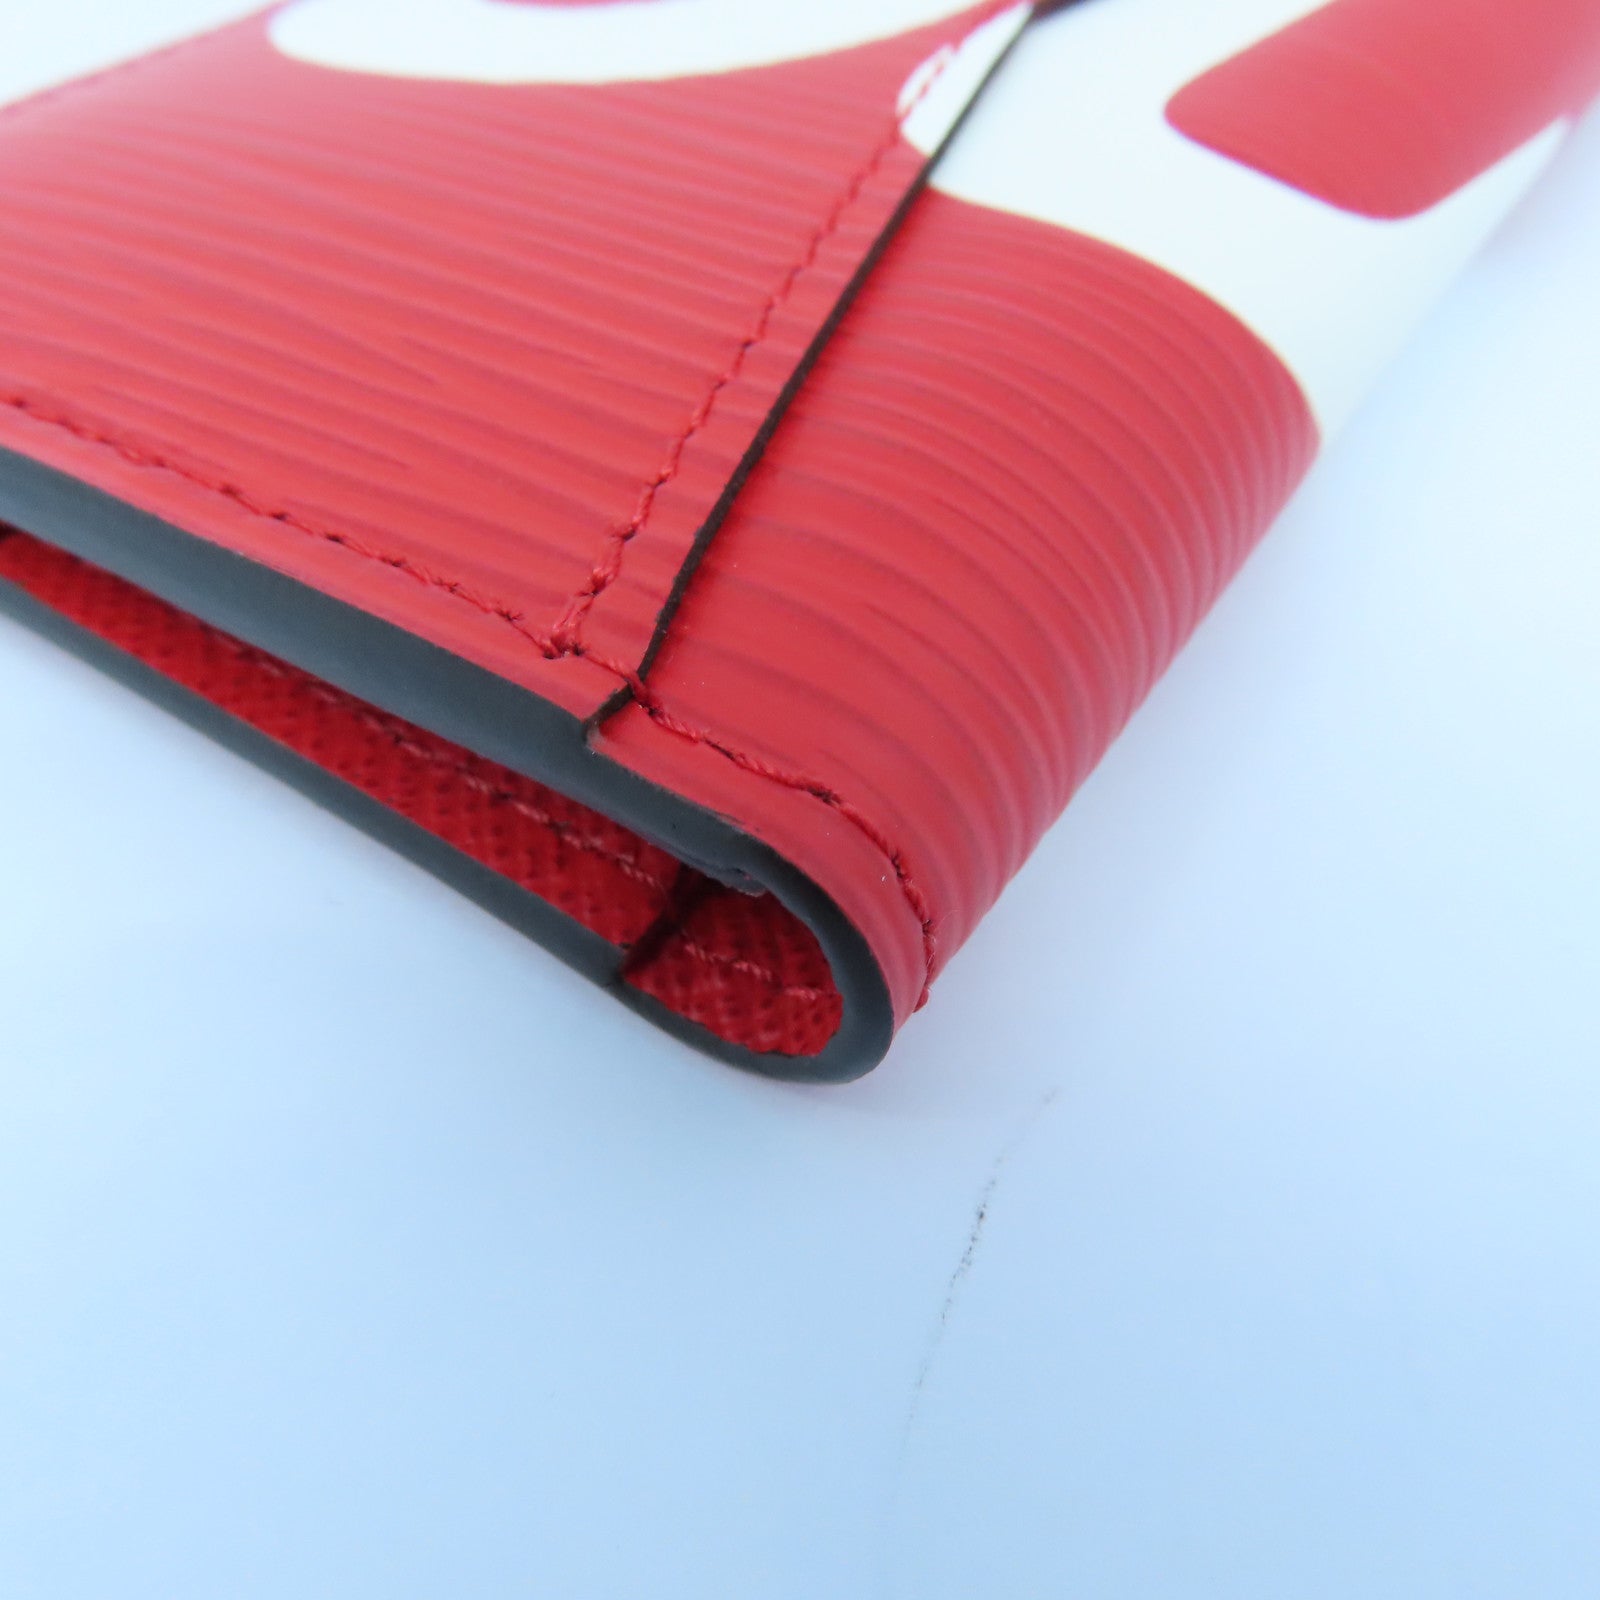 Louis Vuitton Supreme Red White Epi Leather LV Logo Pocket Organizer Wallet